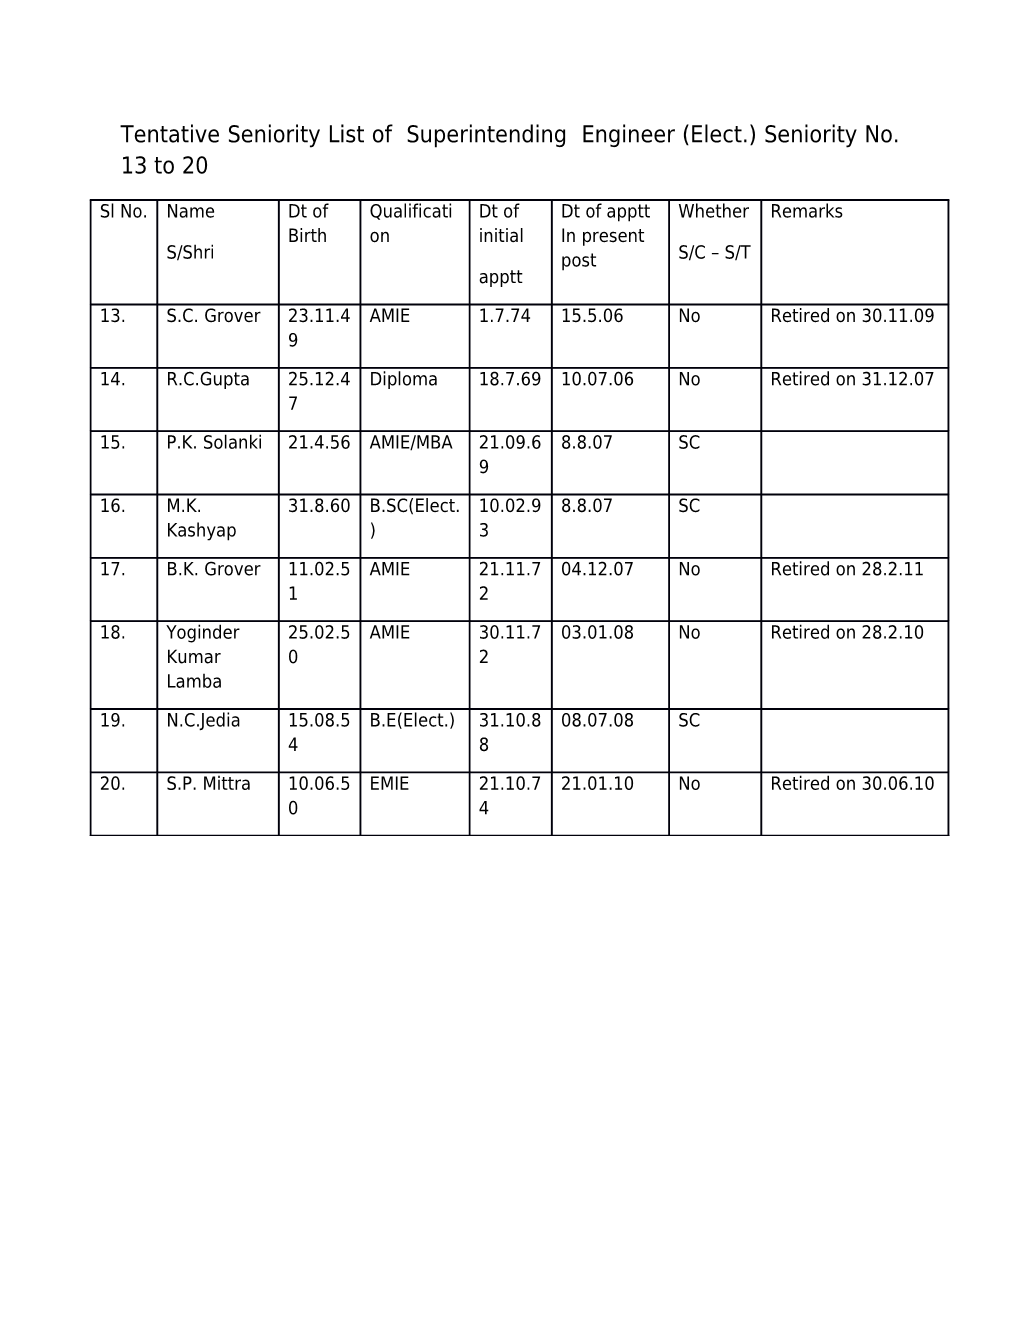 Tentative Seniority List of Superintending Engineer (Elect.) Seniority No. 13 to 20